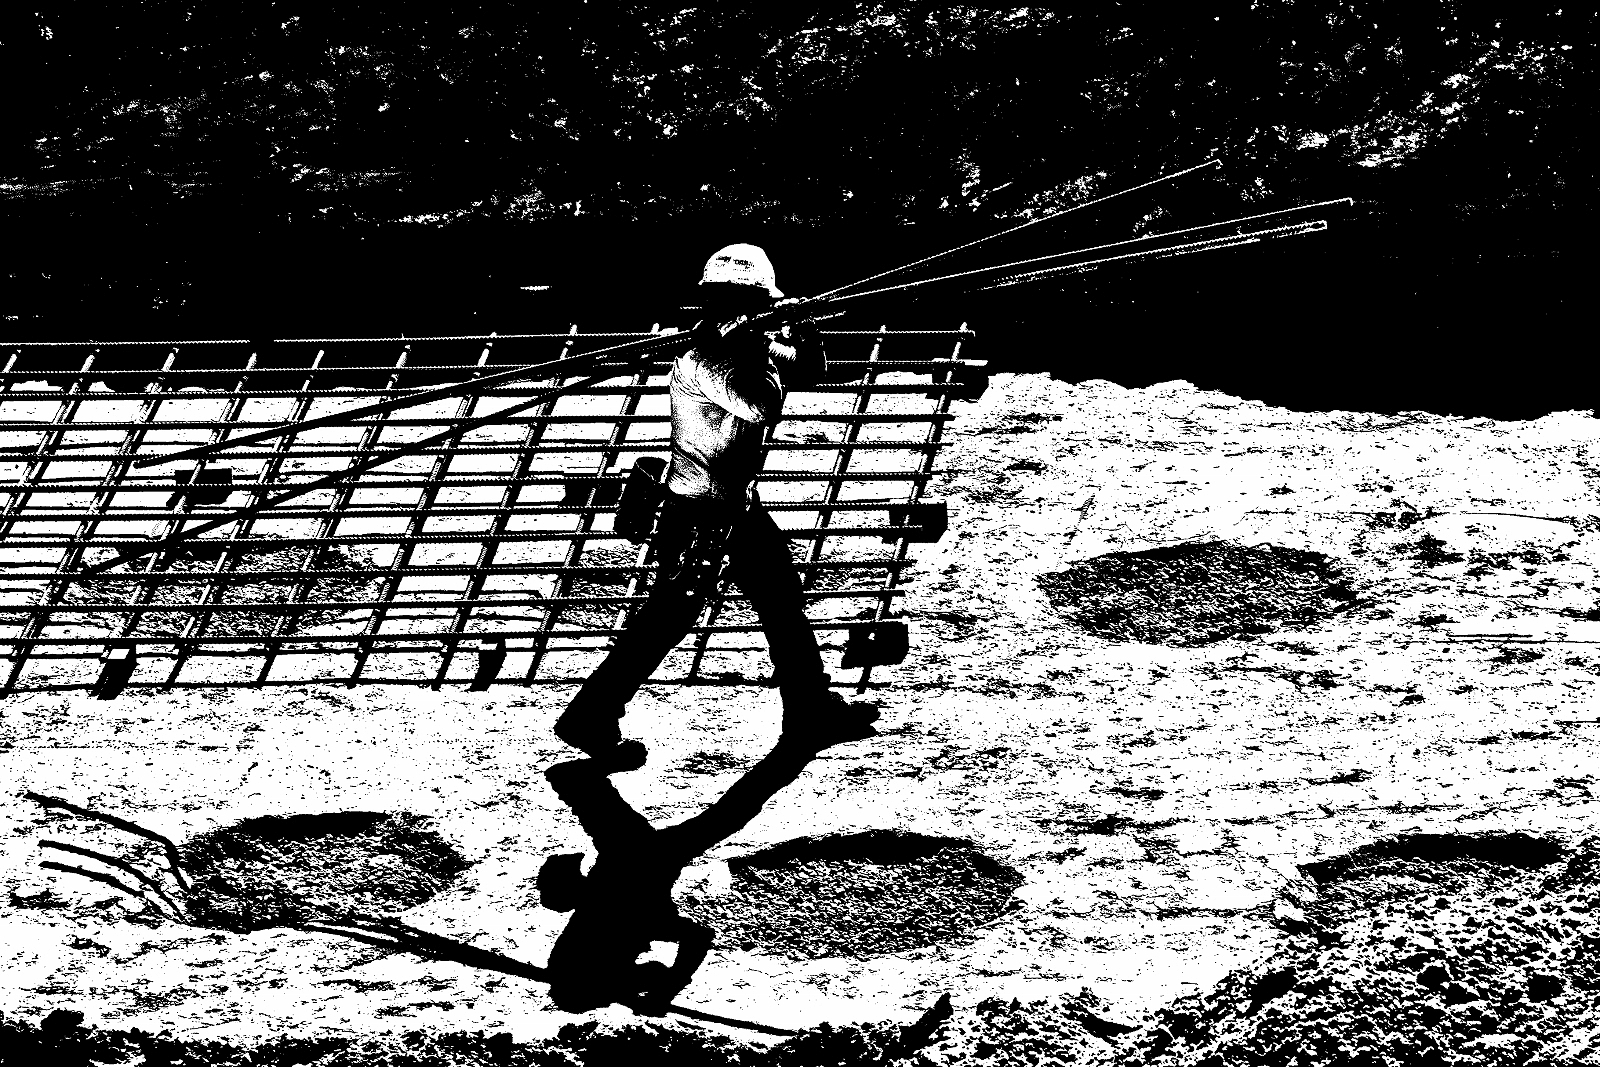 Steel worker carrying steel rods in construction site